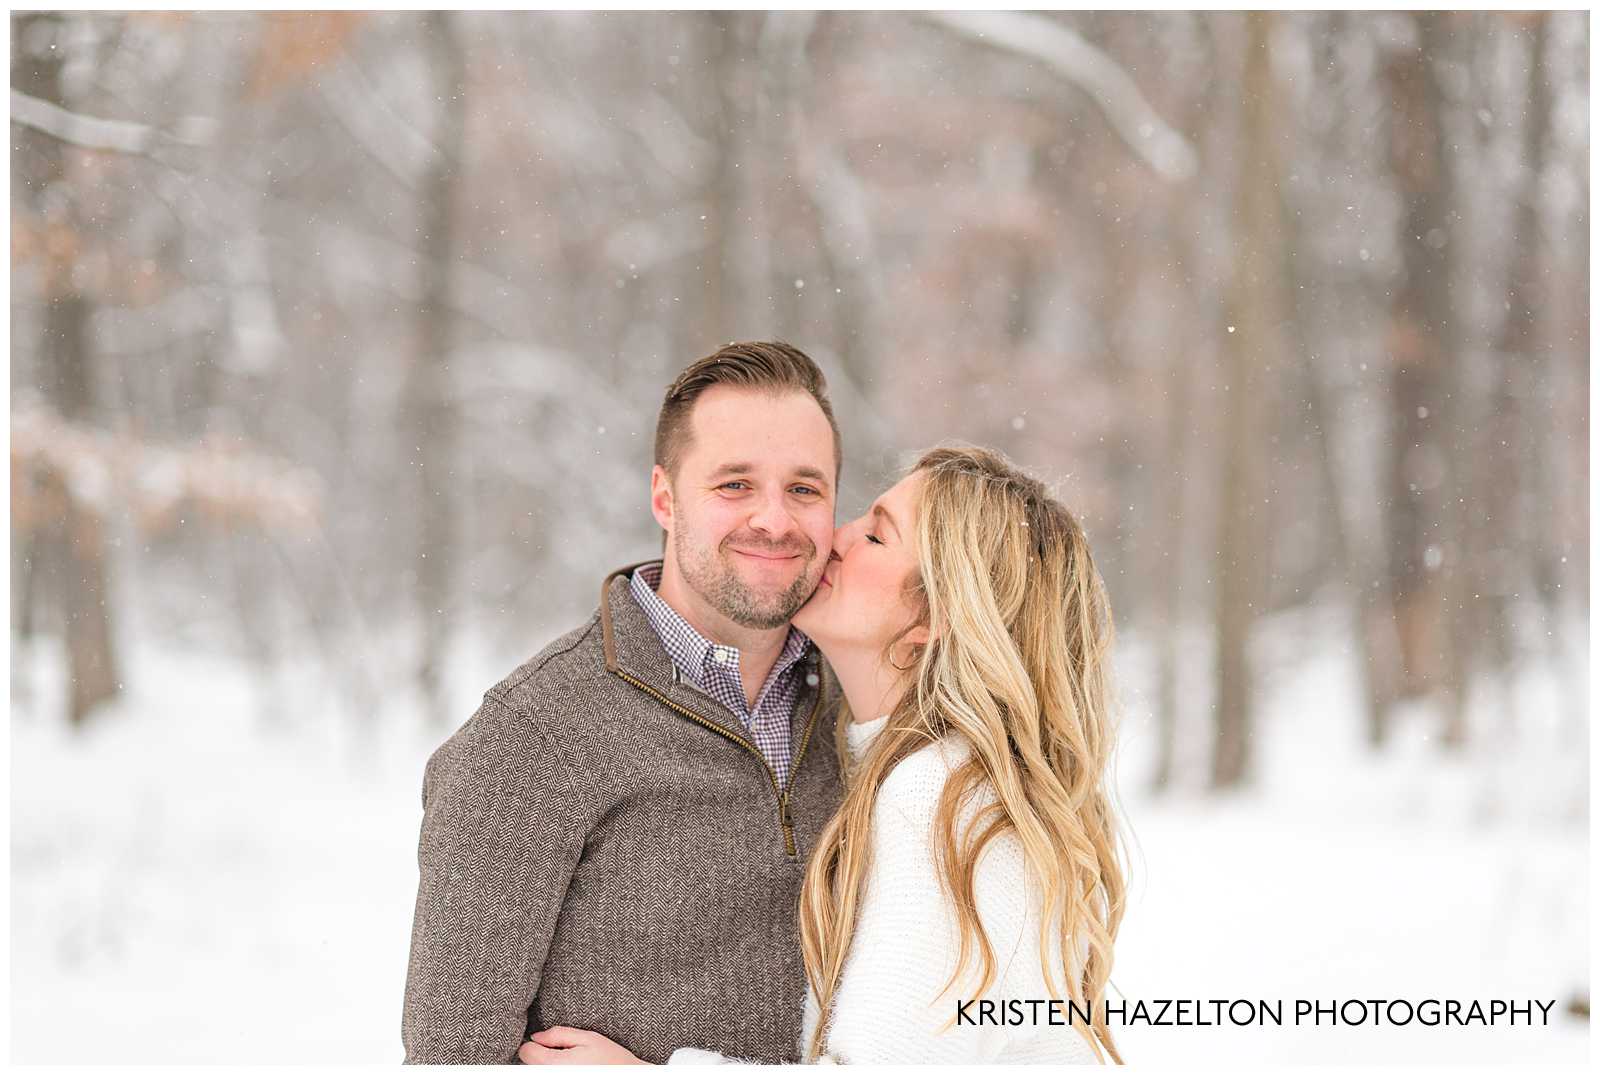 Woman kissing a man on the cheek in the snow - winter photoshoot ideas by Kristen Hazelton